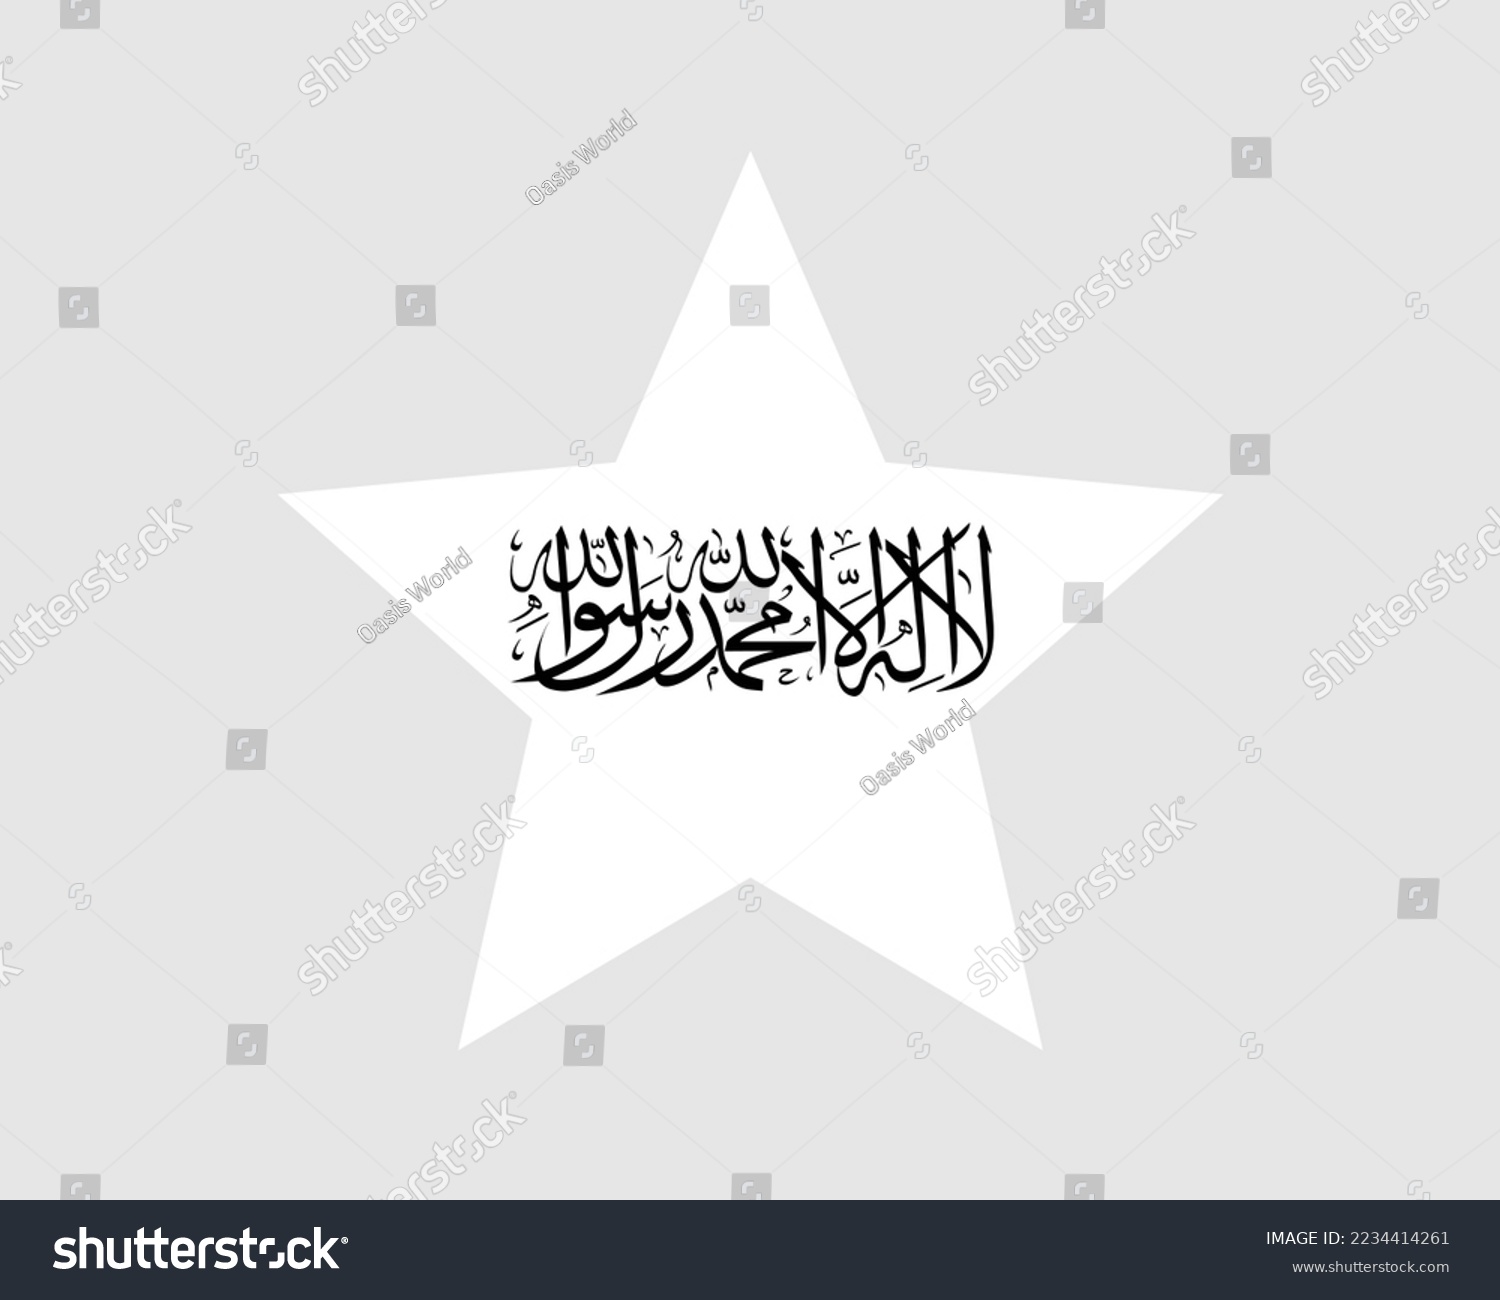 SVG of Afghanistan Star Flag. Afghan Star Shape Flag. Taliban Islamic Emirate of Afghanistan Country National Banner Icon Symbol Vector 2D Flat Artwork Graphic Illustration svg